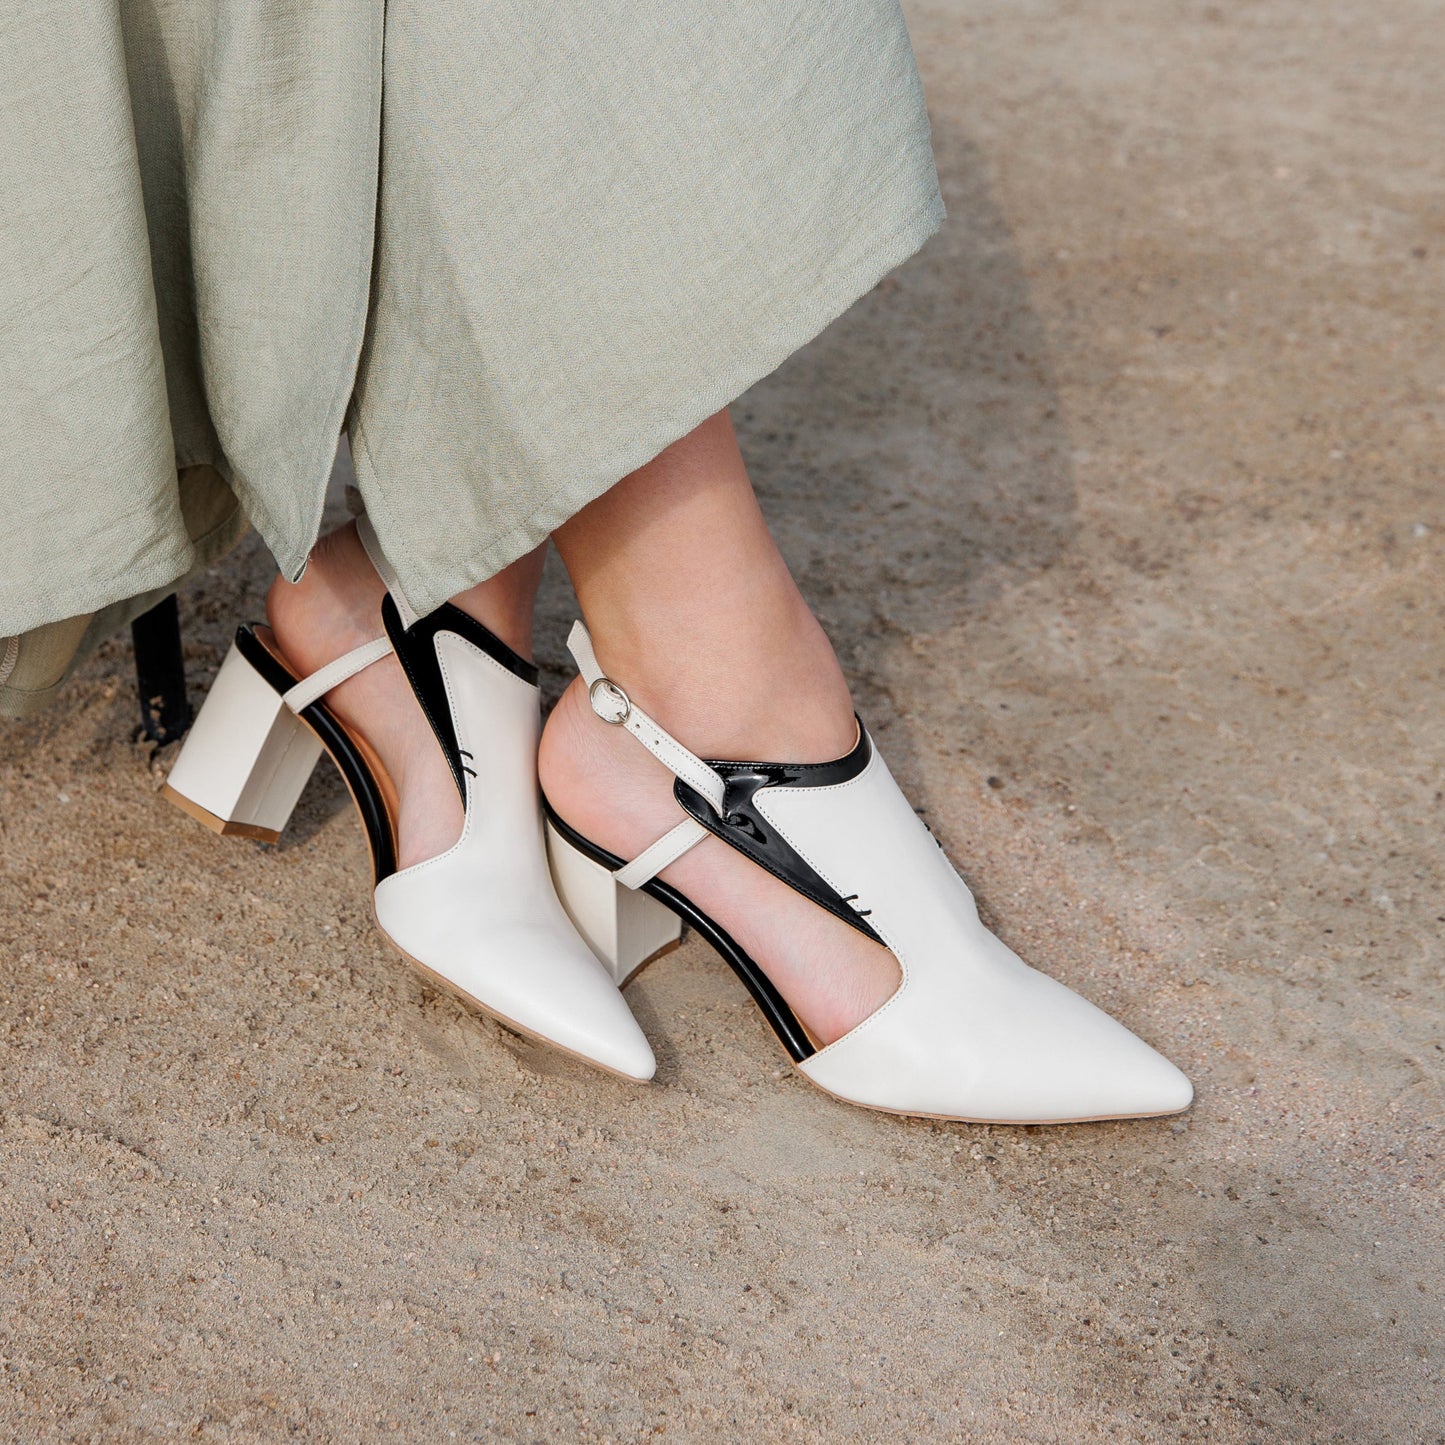 Kadi cream heel- Cactus- Heels - kuwait - Ksa- shoes